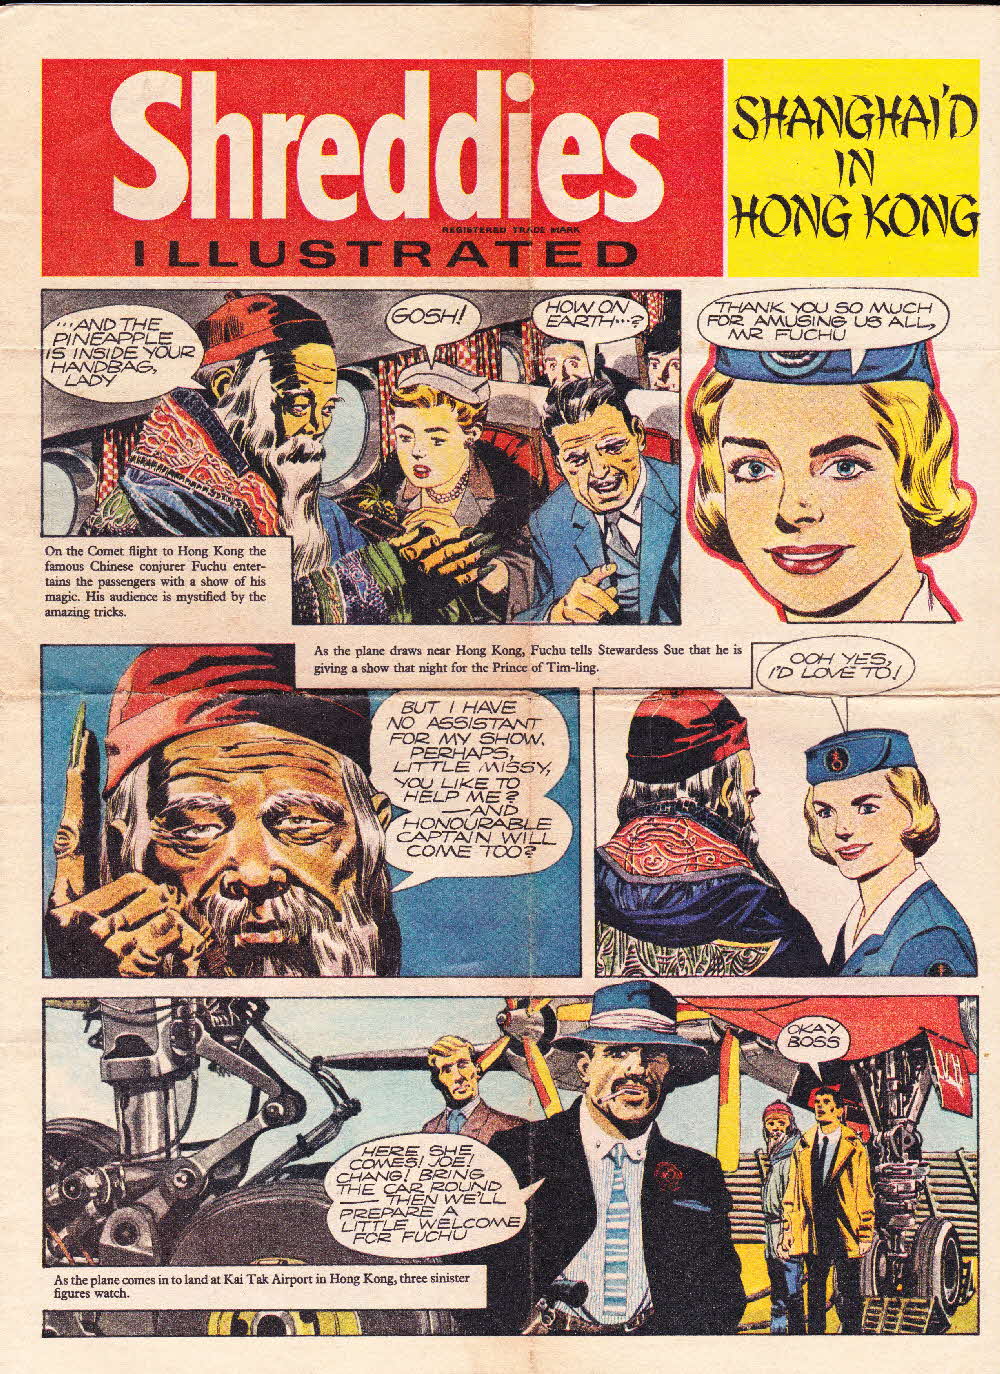 1960s Shreddies New Adventure Comic Shanghaid